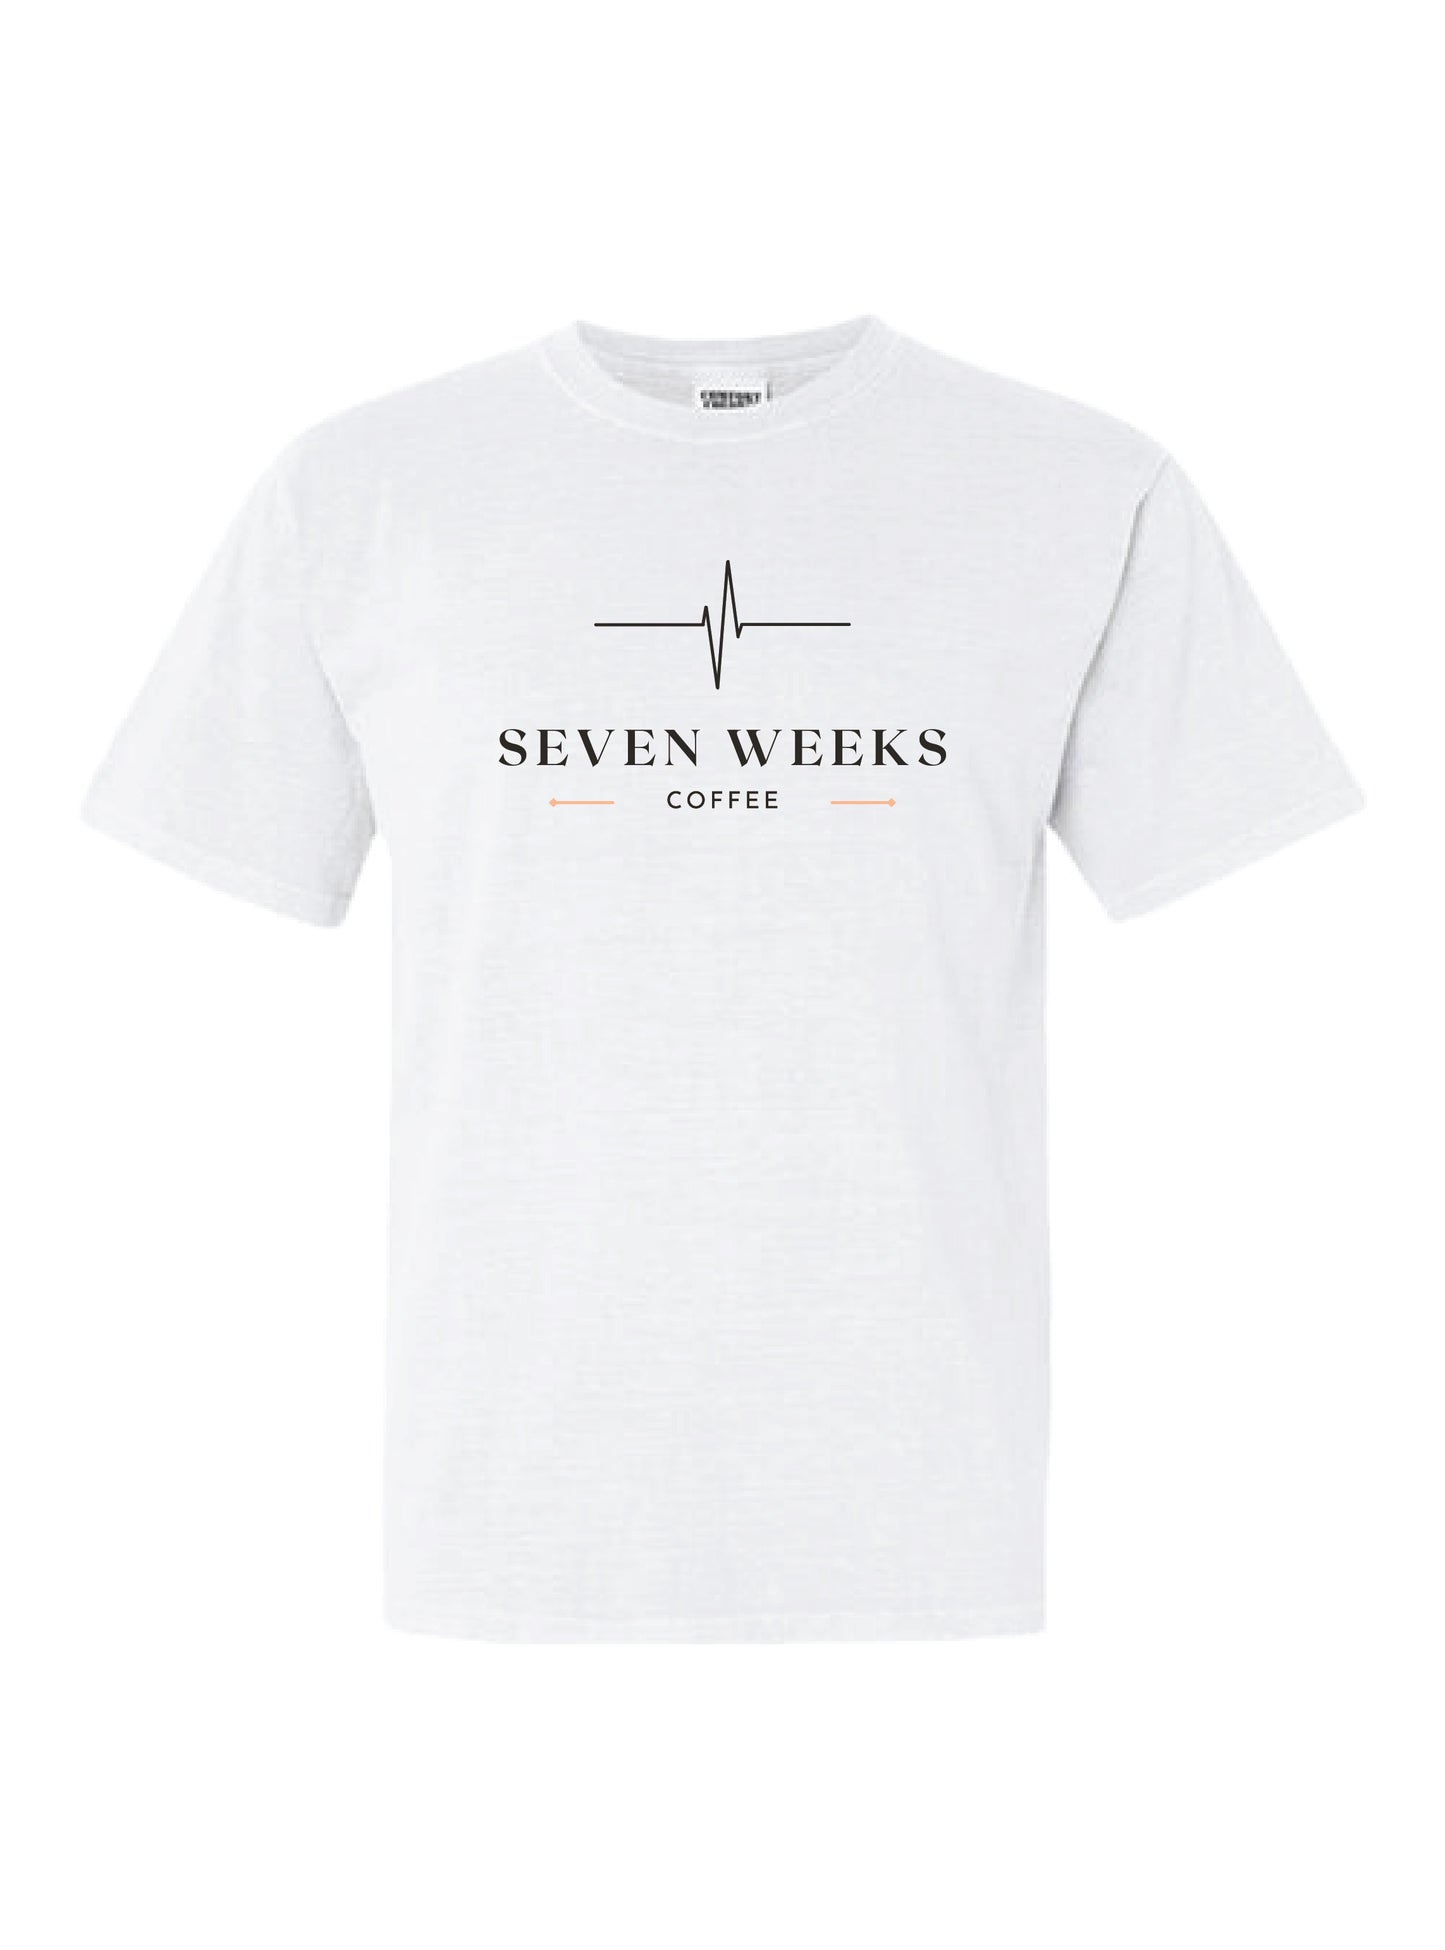 Seven Weeks Tee - White